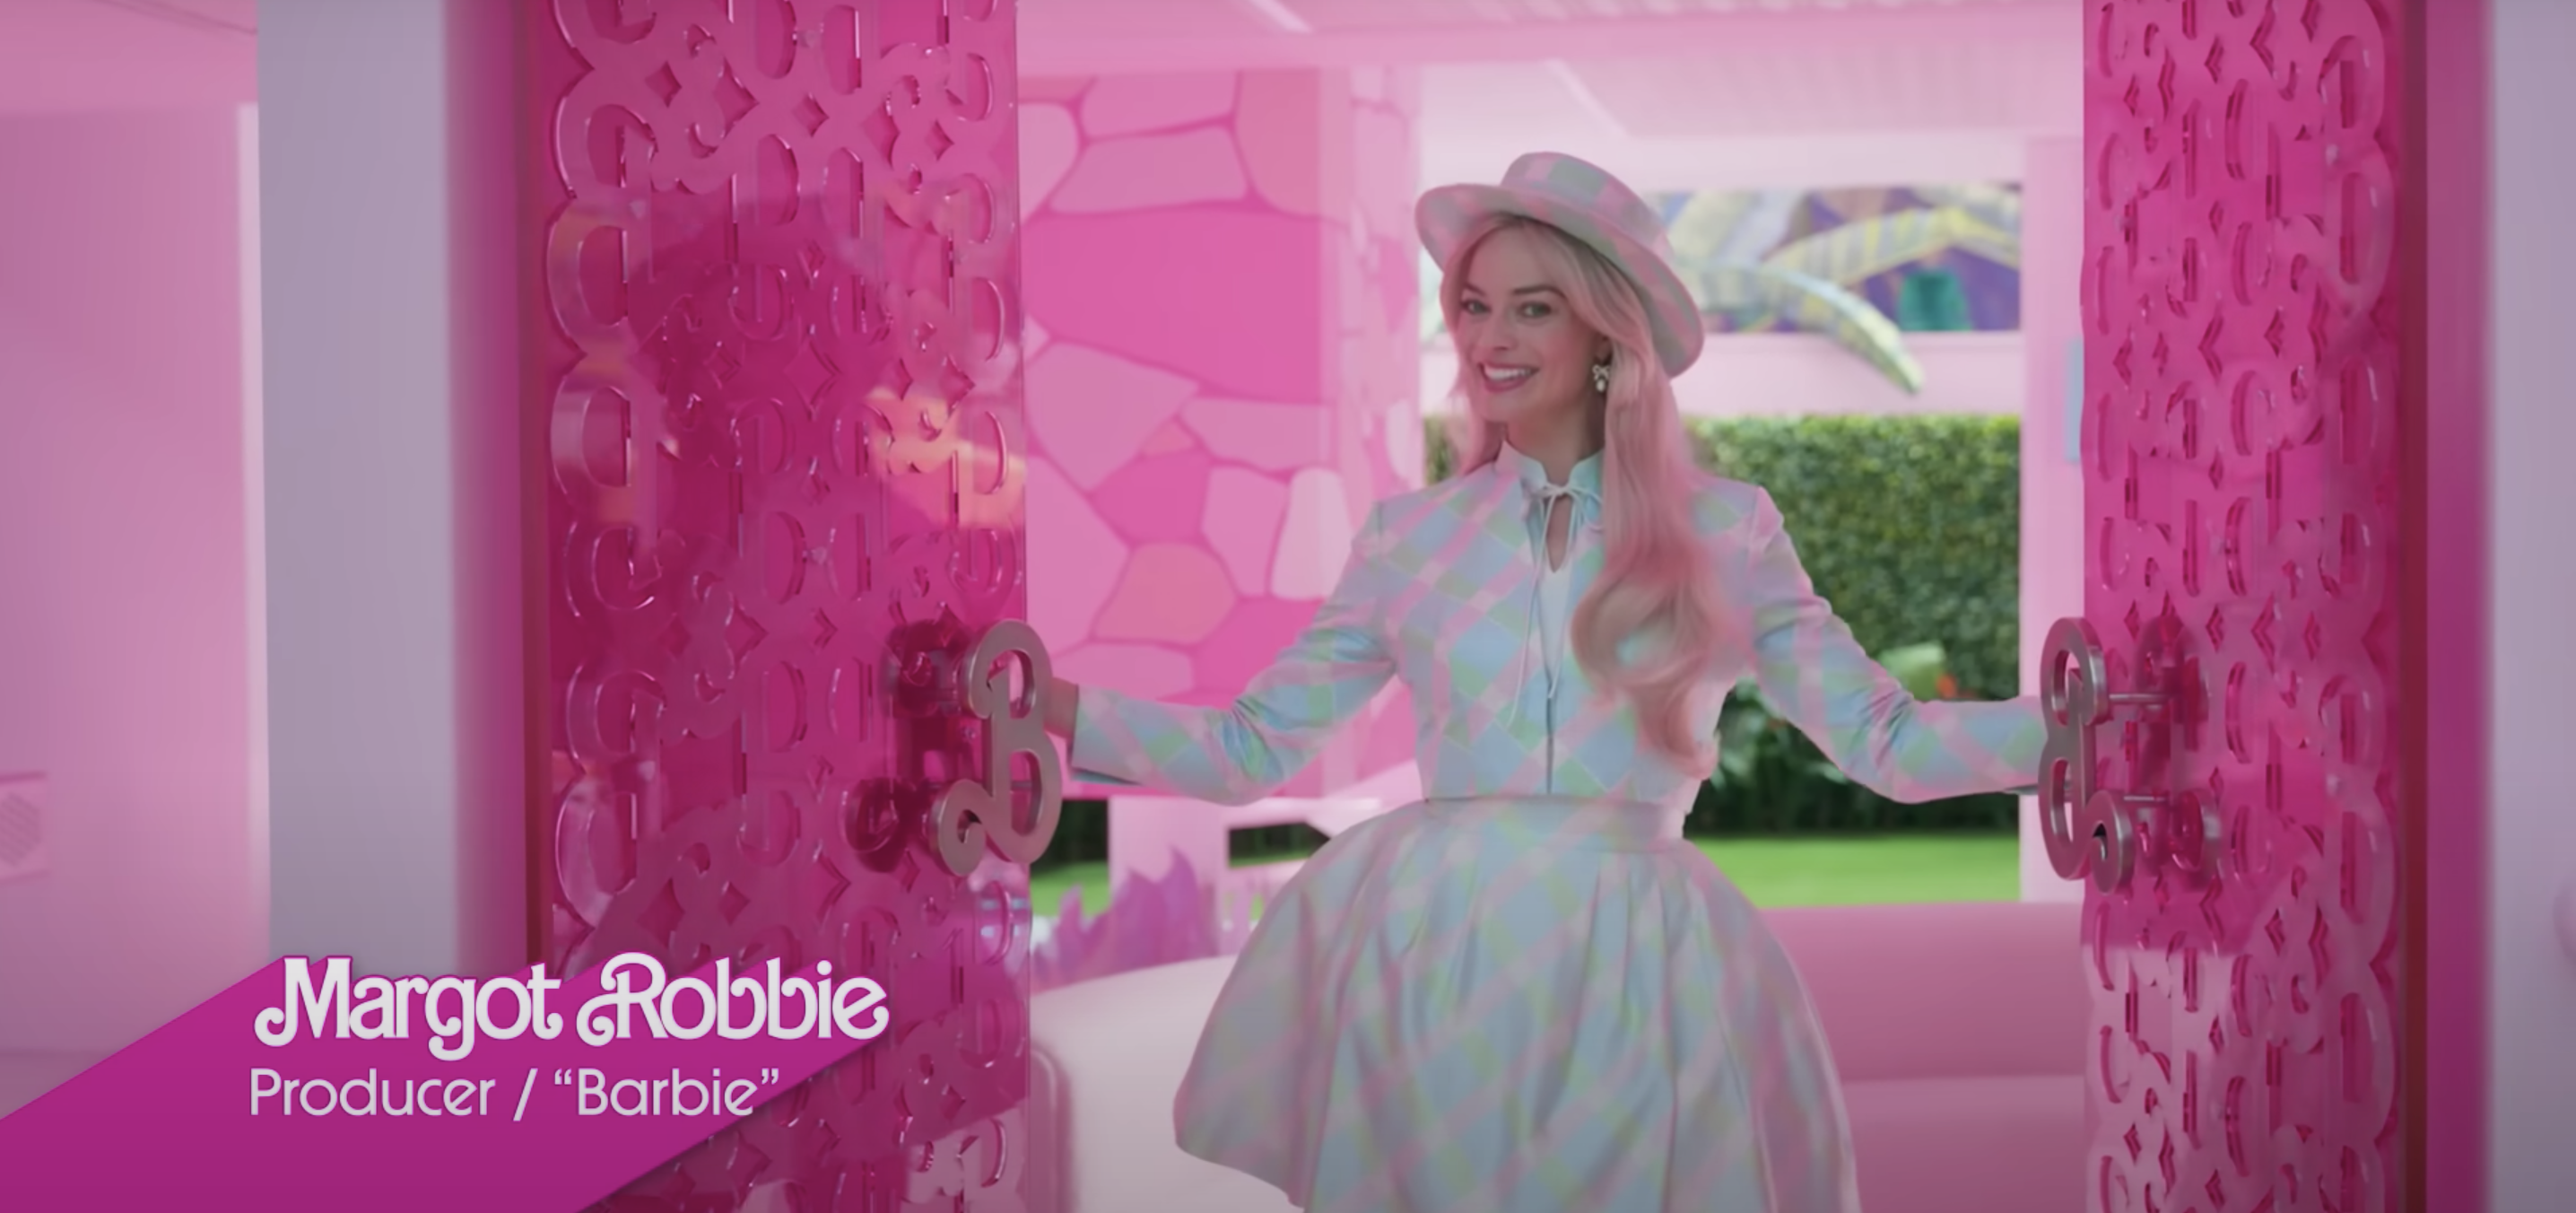 Margo Robbie opening the barbie dollhouse doors